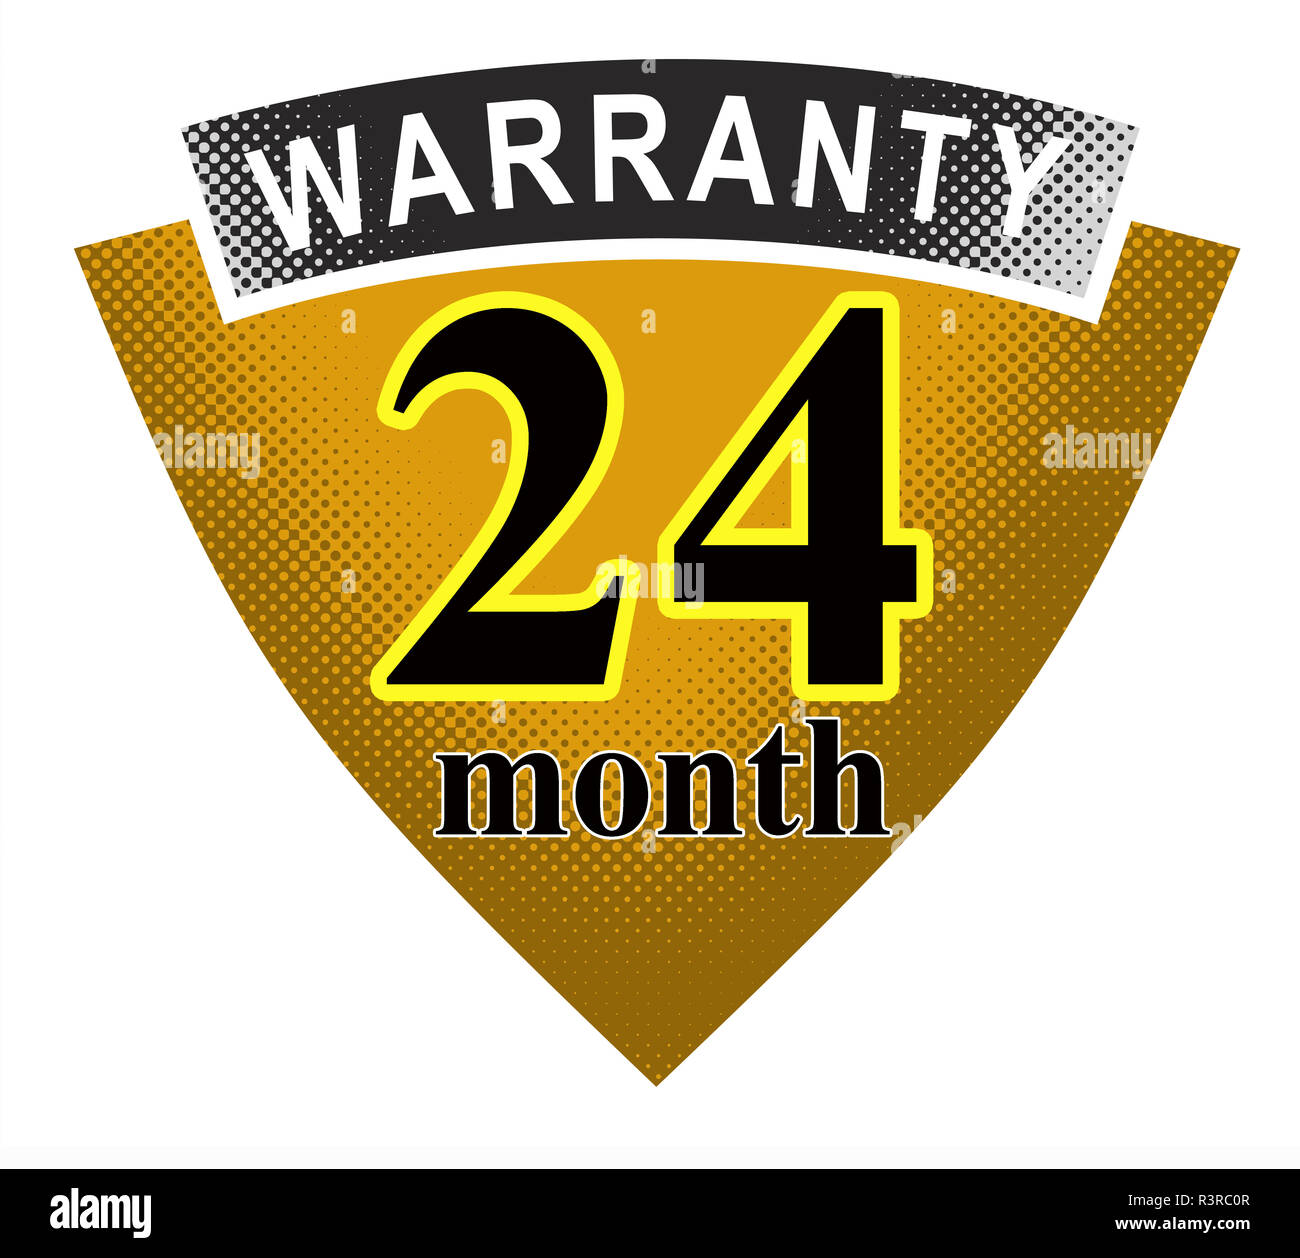 24 months. 24 Month Warranty. Гарантия щит. 24 Месяца стандартная гарантия. Гарантия 12 месяцев иконка.